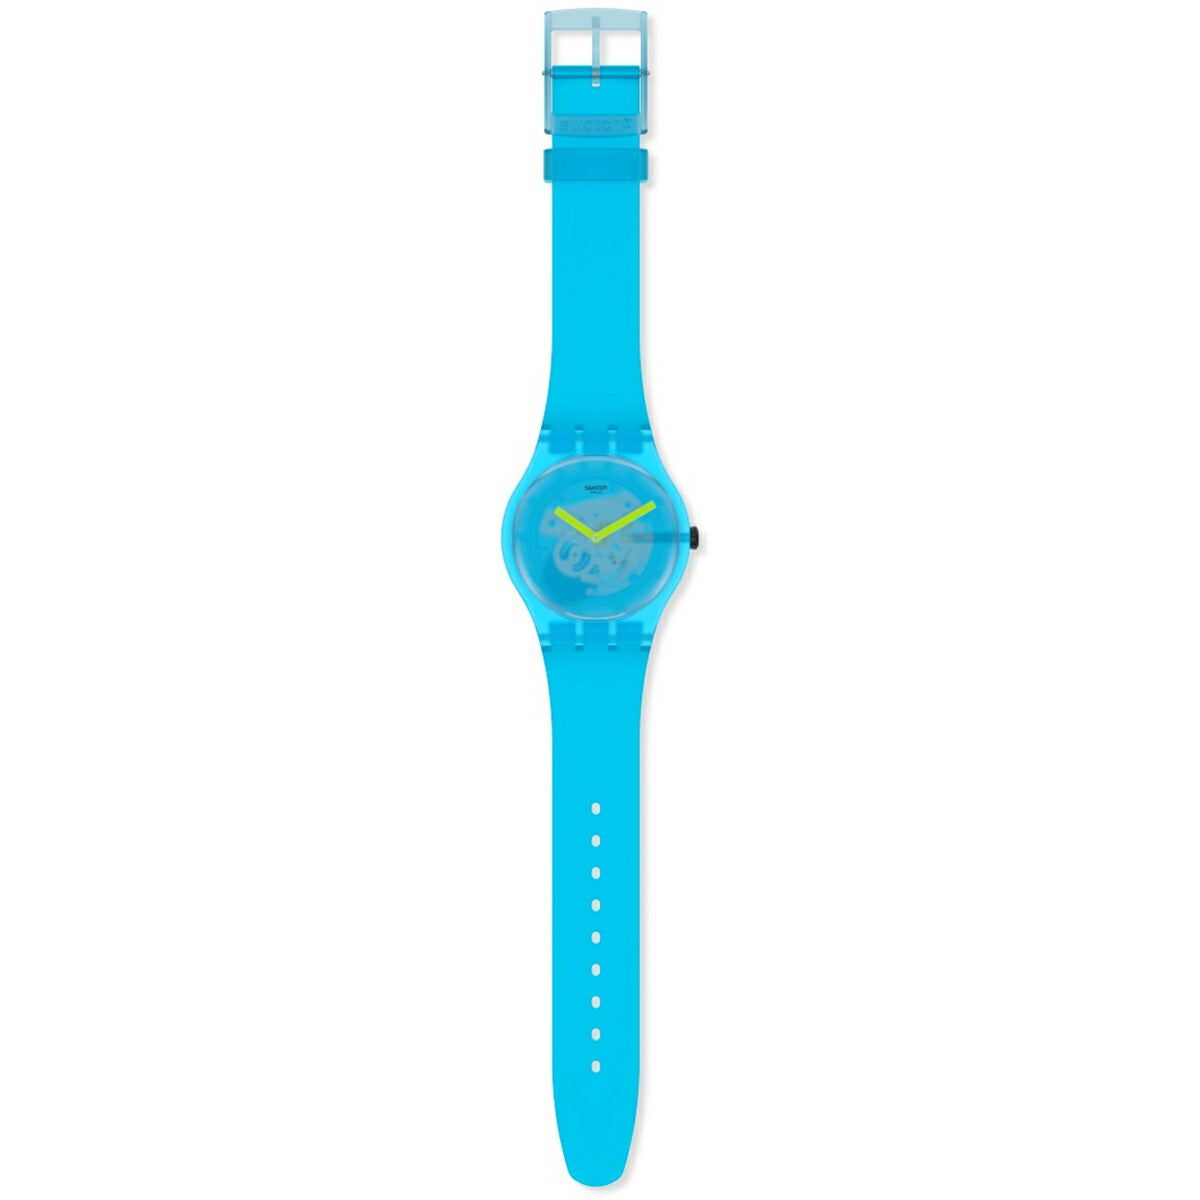 swatch スウォッチ 腕時計 メンズ レディース オリジナルズ ニュージェント オーシャン・ブラー Originals New Gent OCEAN BLUR SUOS112